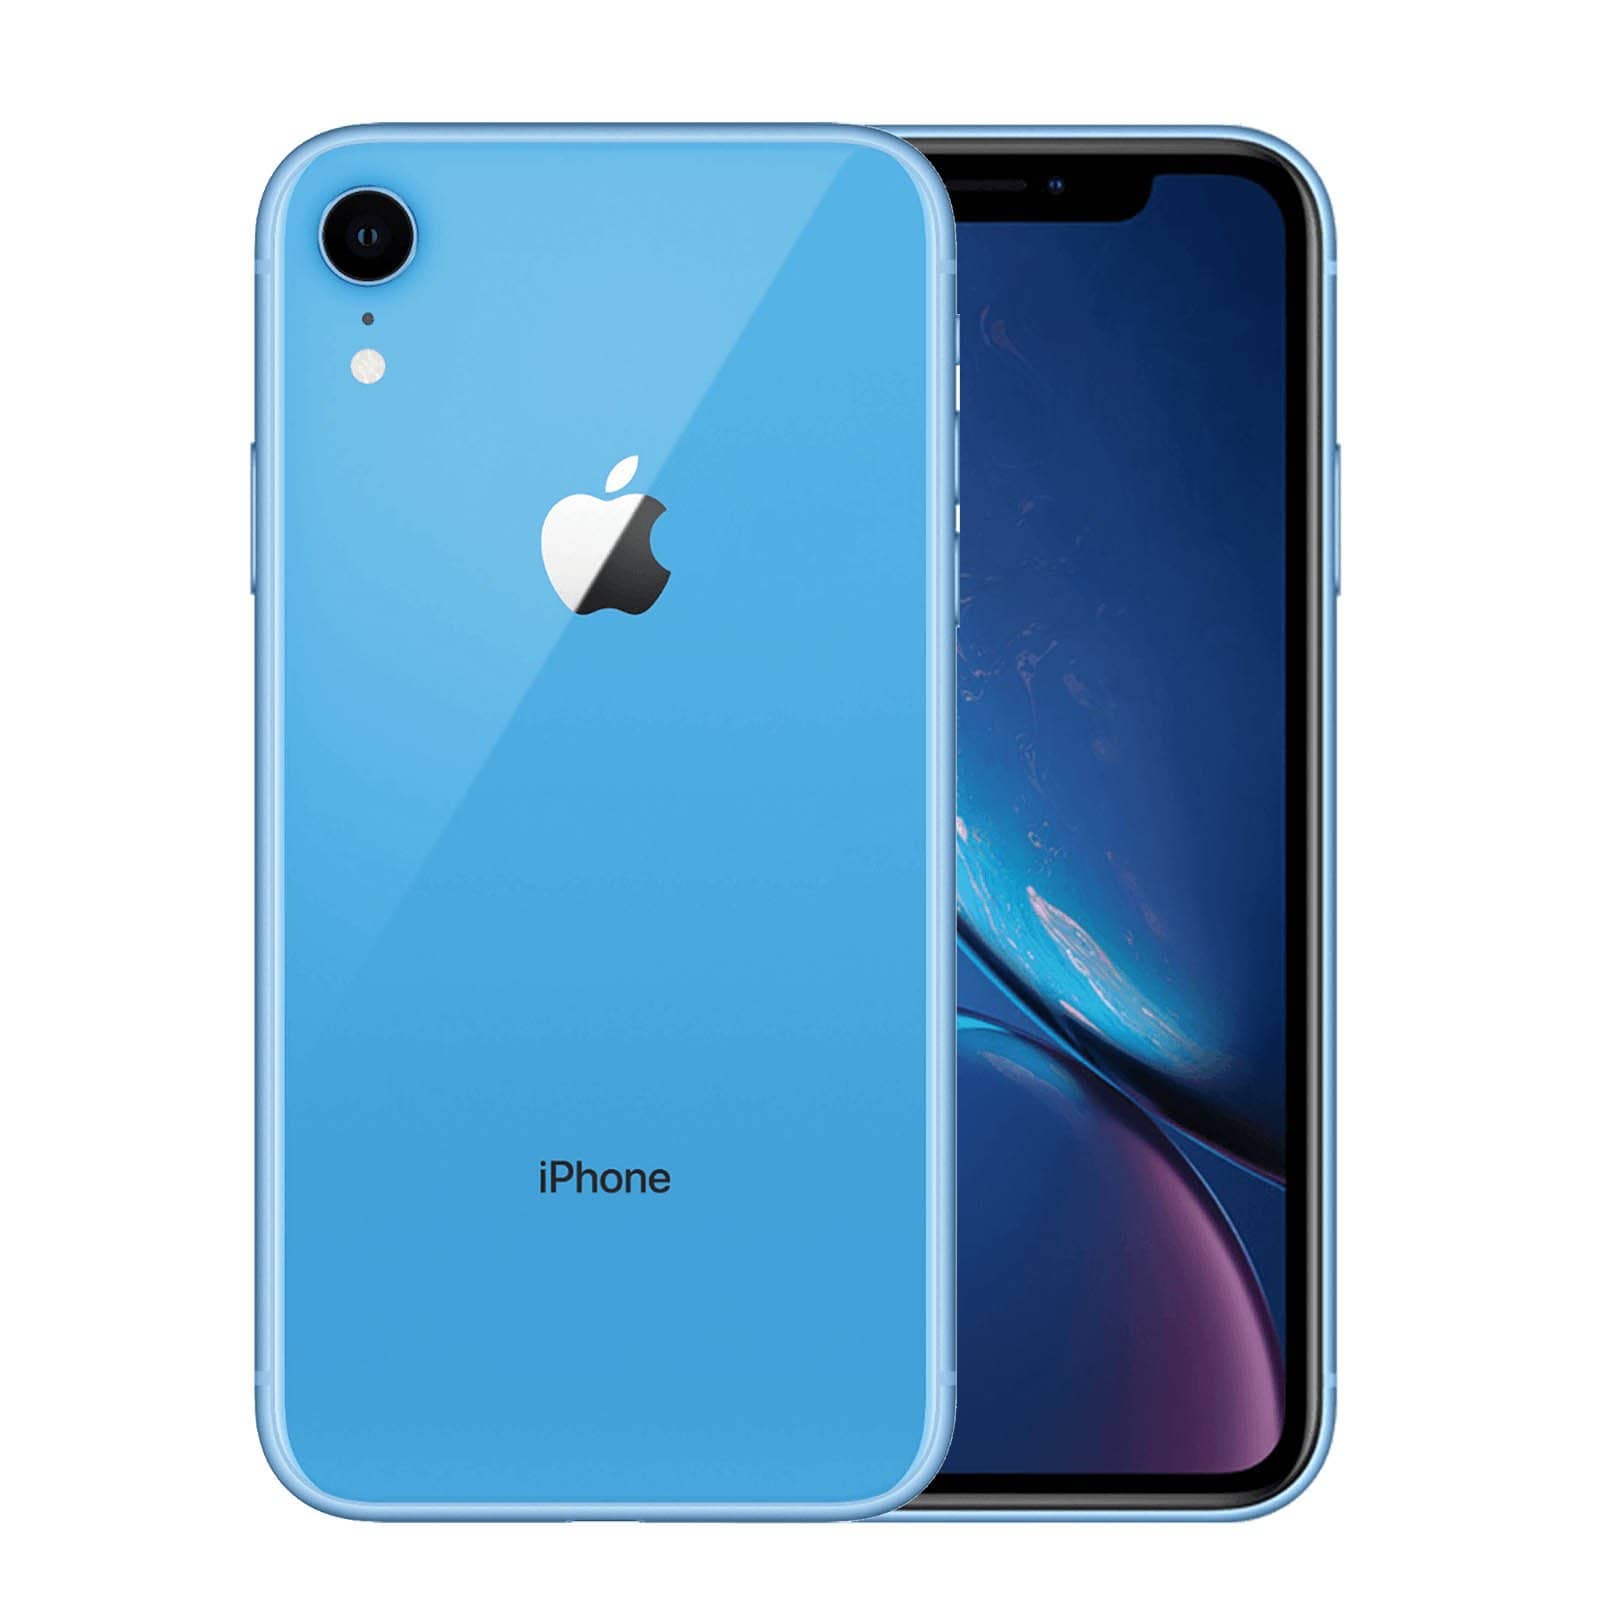 Apple iPhone XR 64GB Blue Good - Unlocked 64GB Blue Good